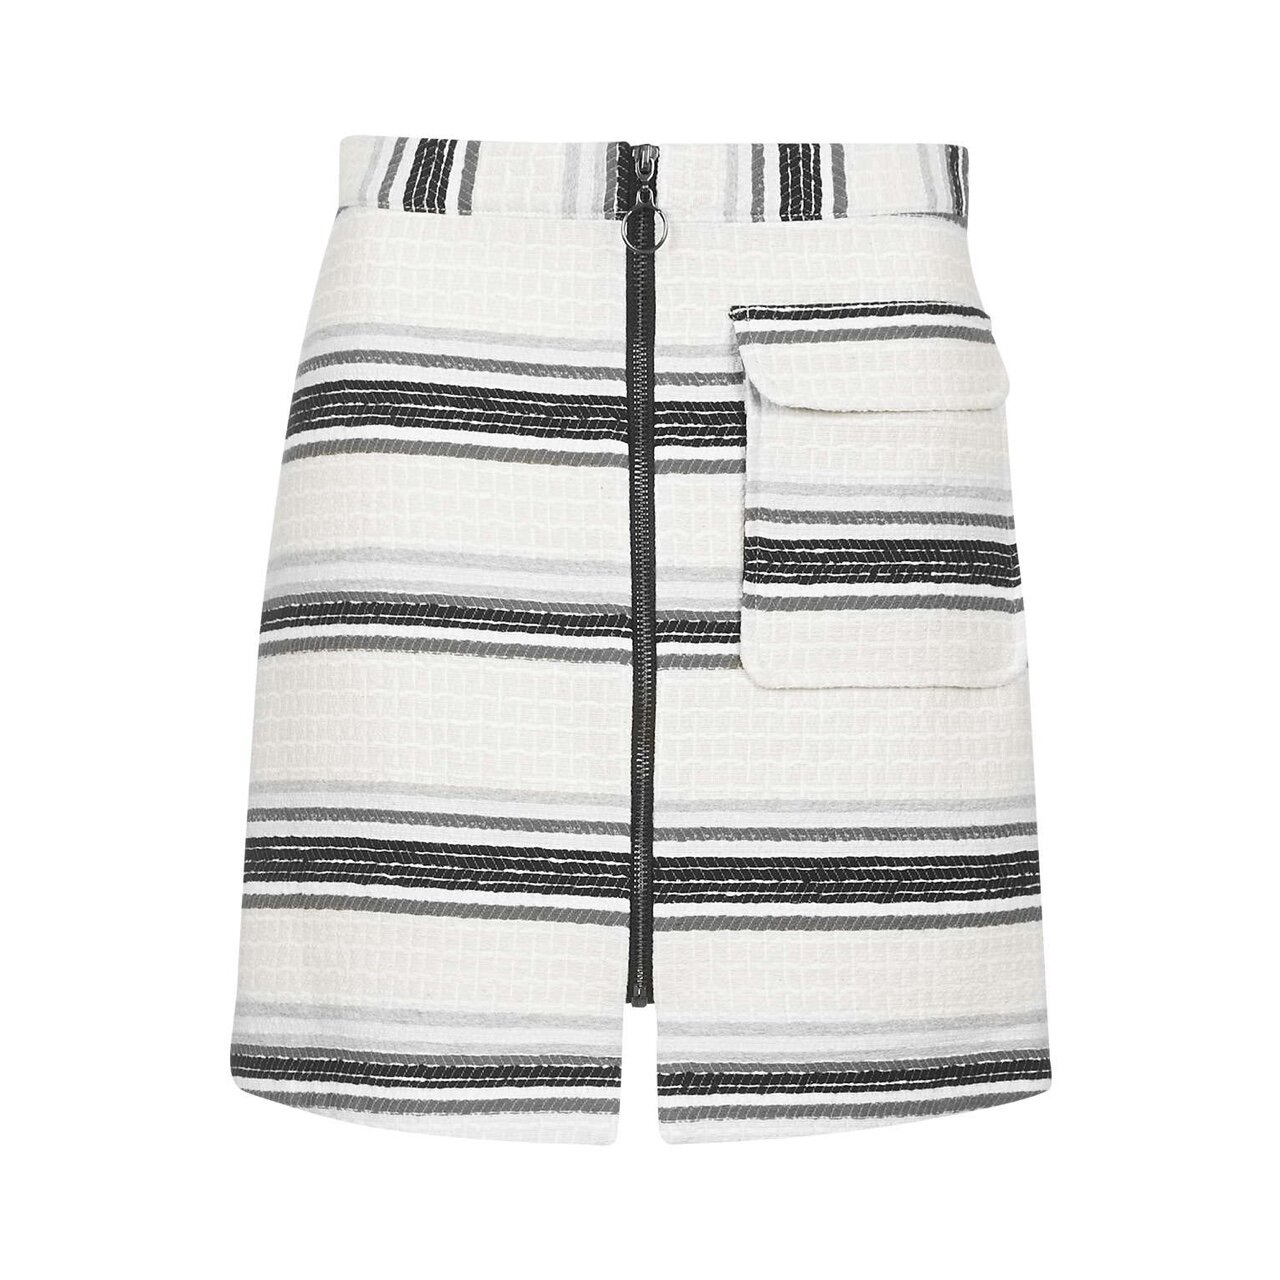 Topshop Striped Zip Through Skirt.jpg